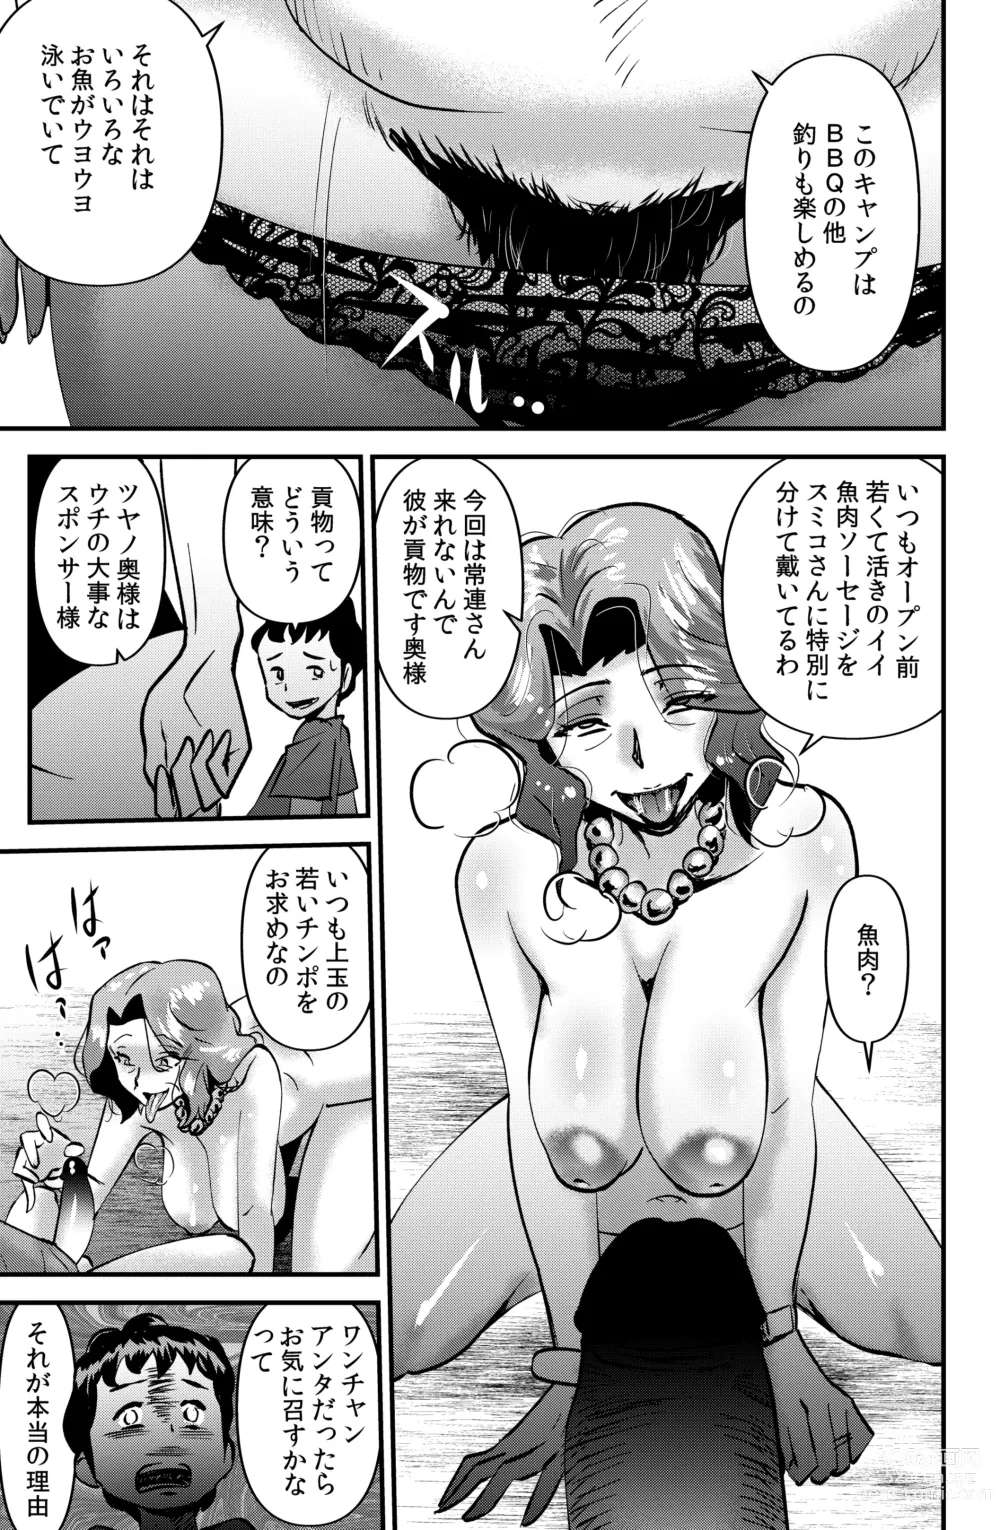 Page 13 of doujinshi Kazoku Camp 2